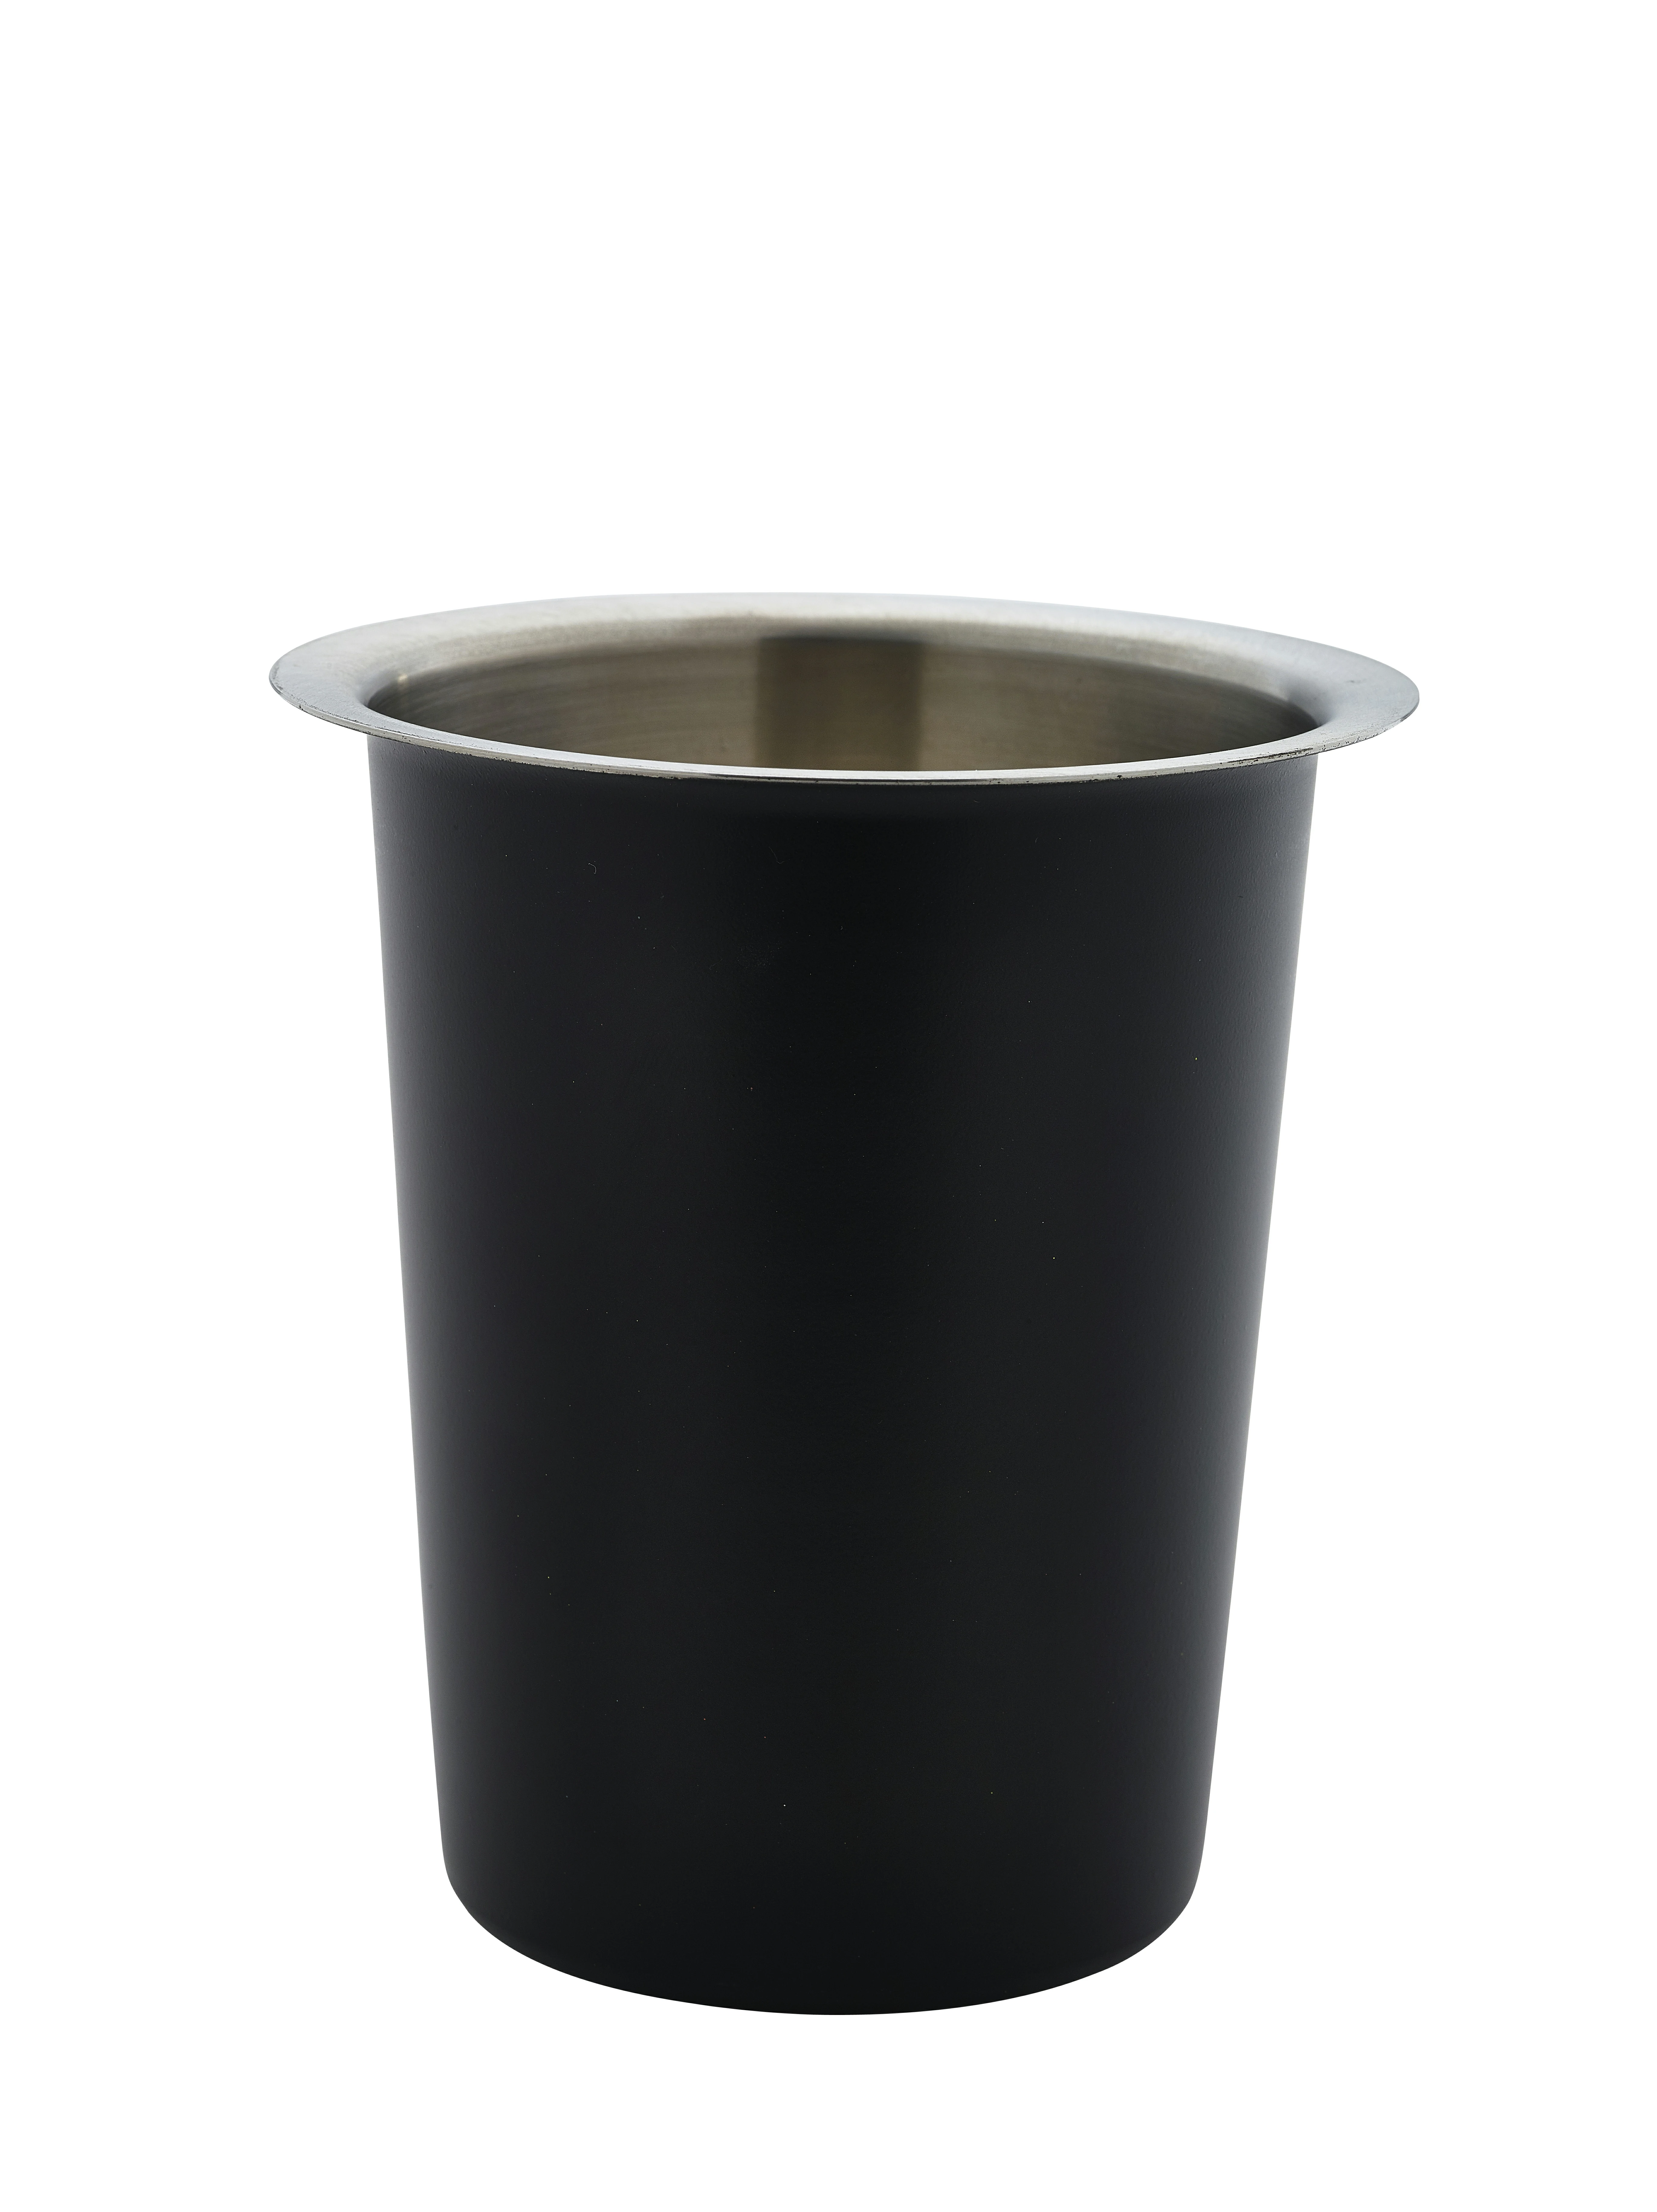 GenWare Stainless Steel Black Cutlery Cylinder